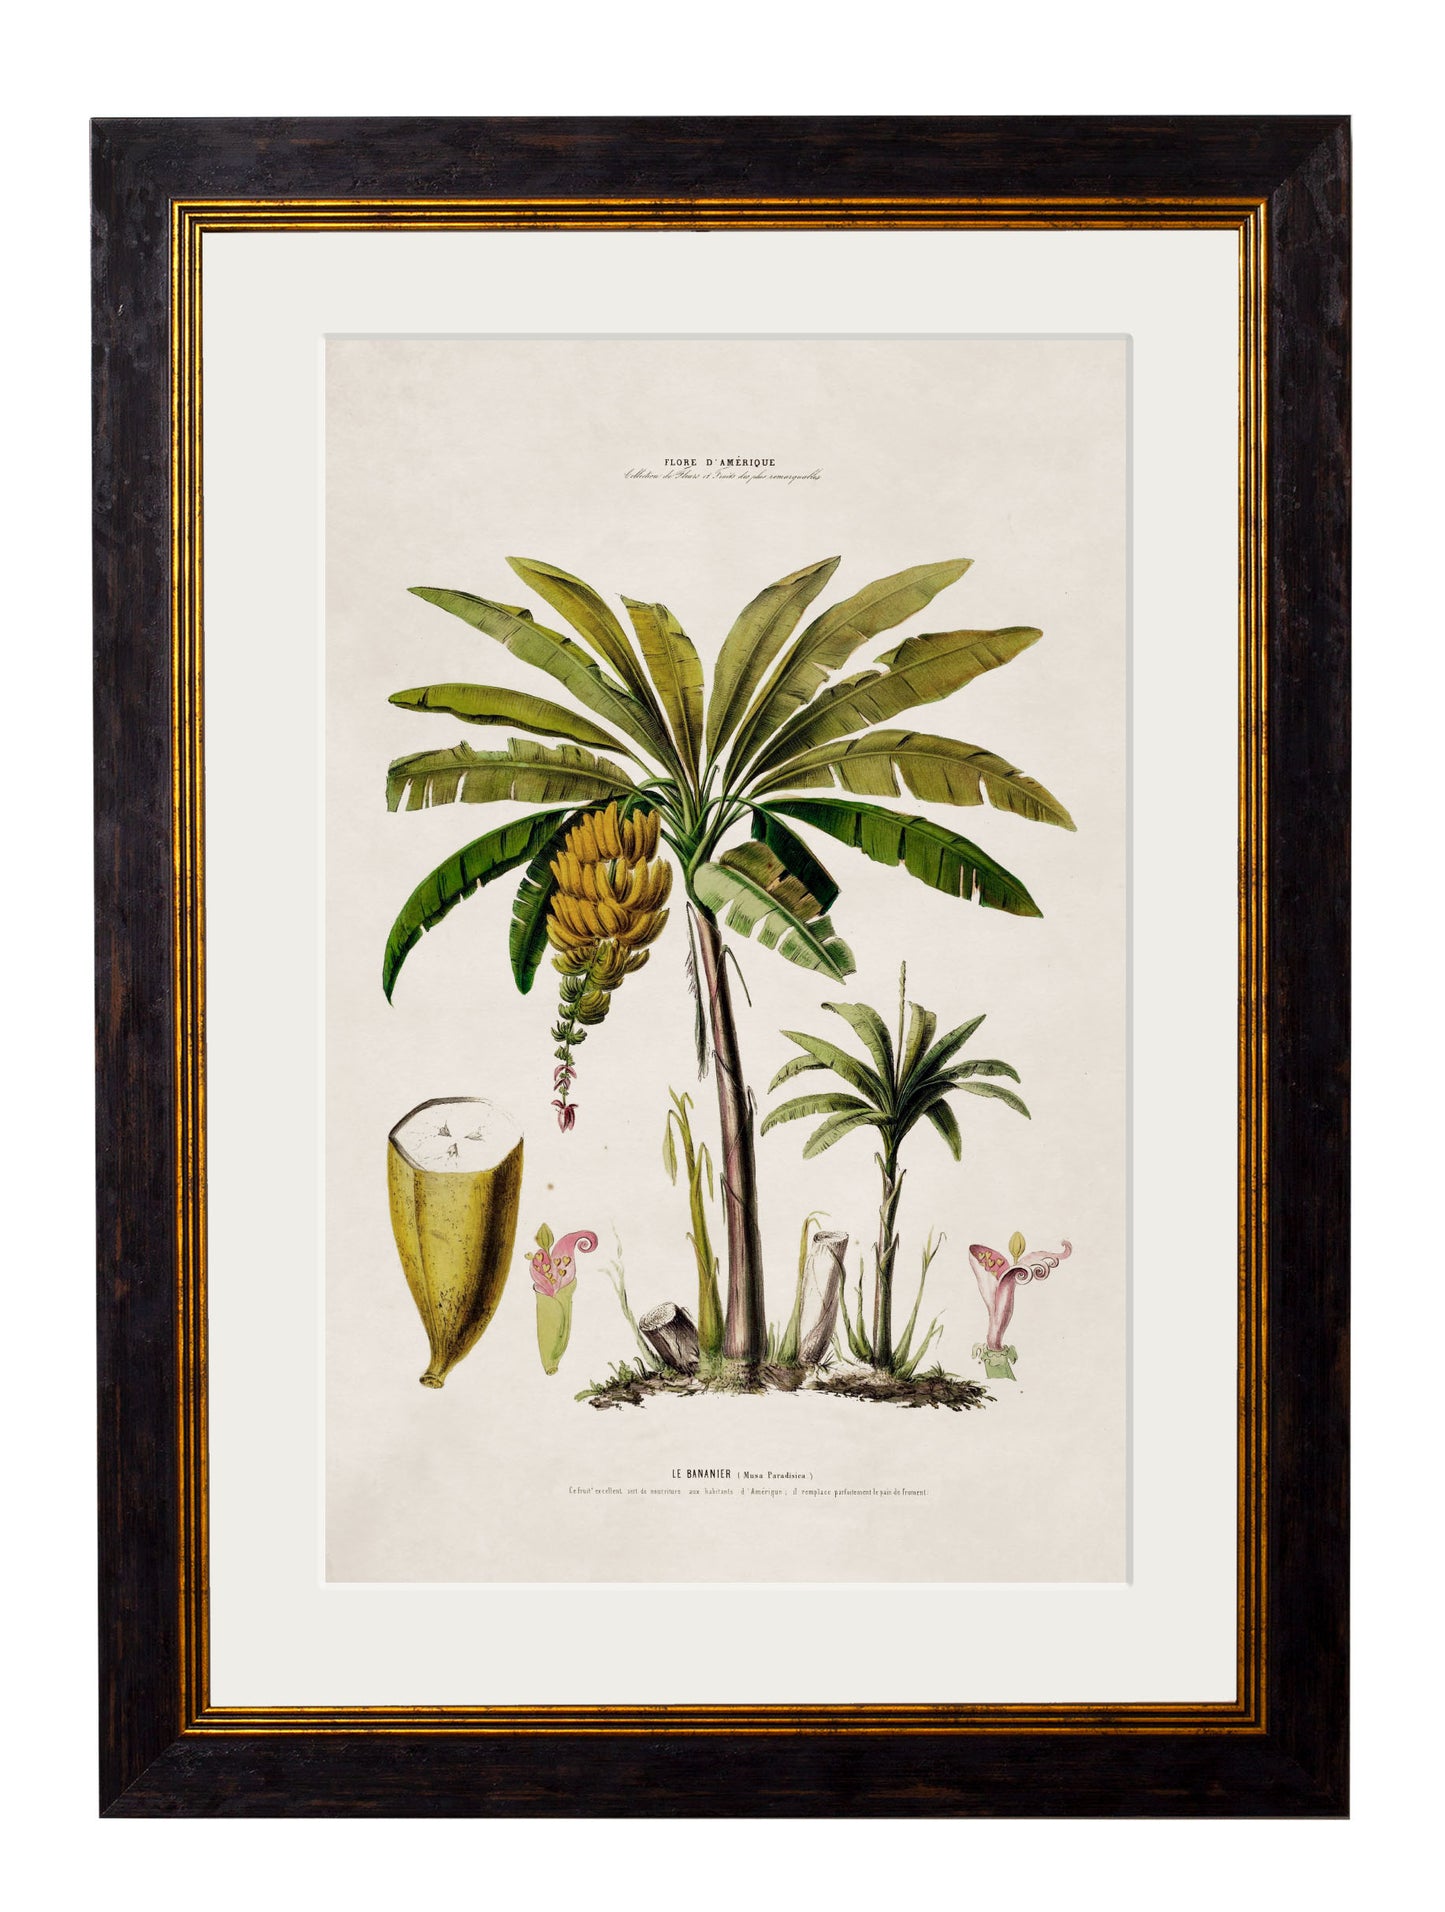 Framed Studies of Palm Trees Prints